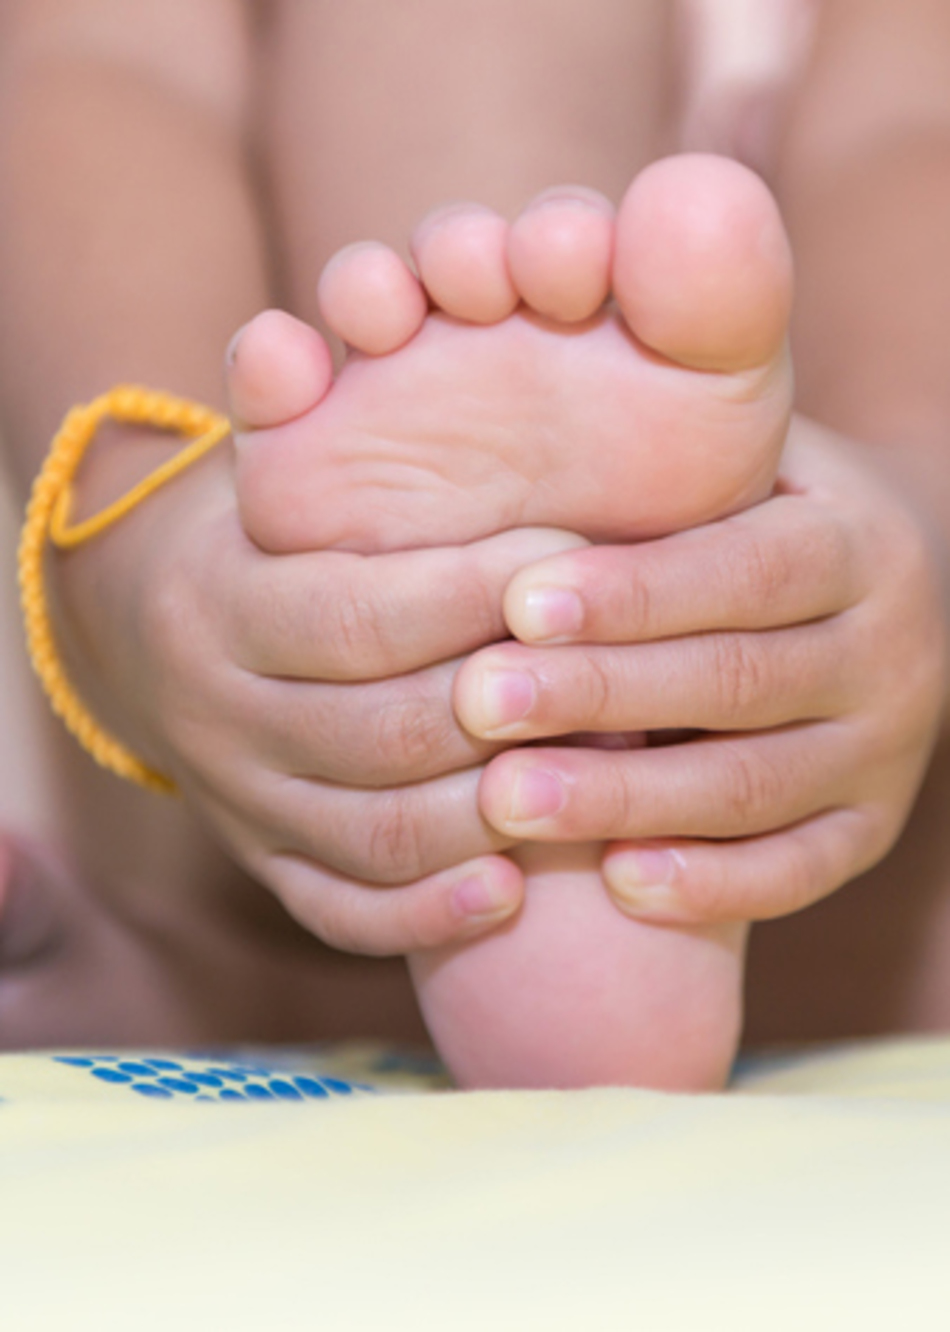 What Causes Common Heel Pain in Children?